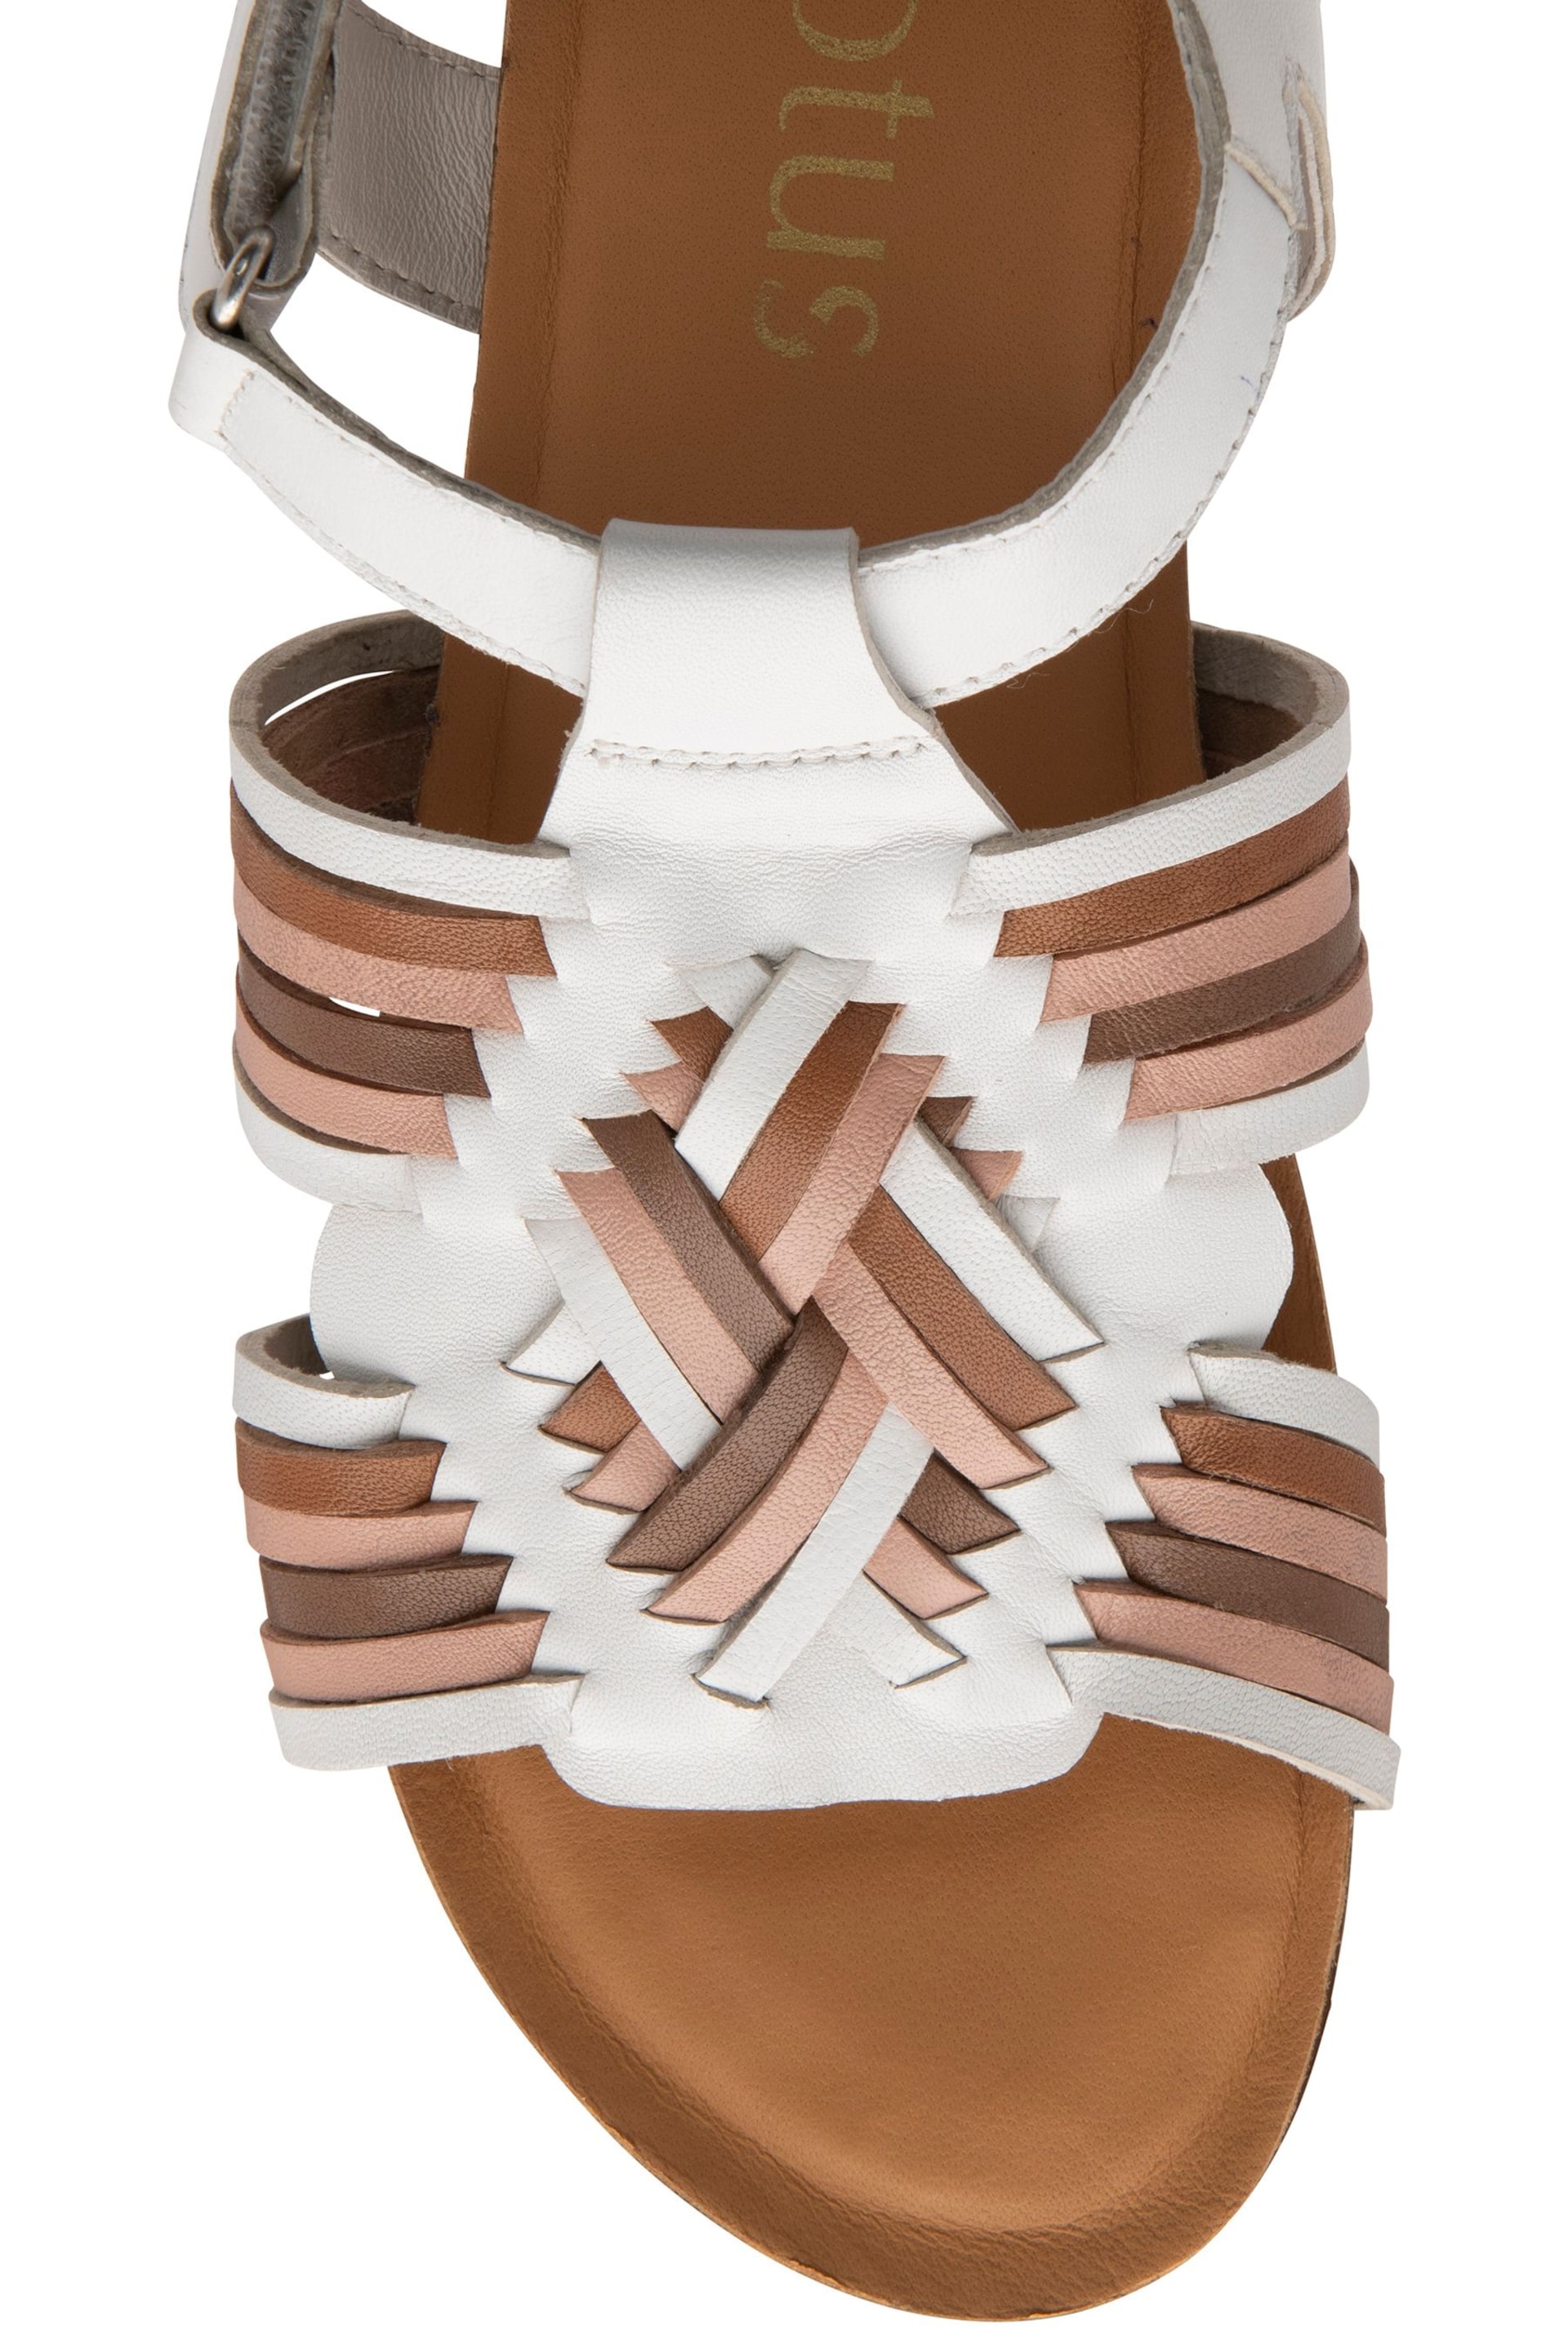 Lotus White Leather Flatform Sandals - Image 4 of 4